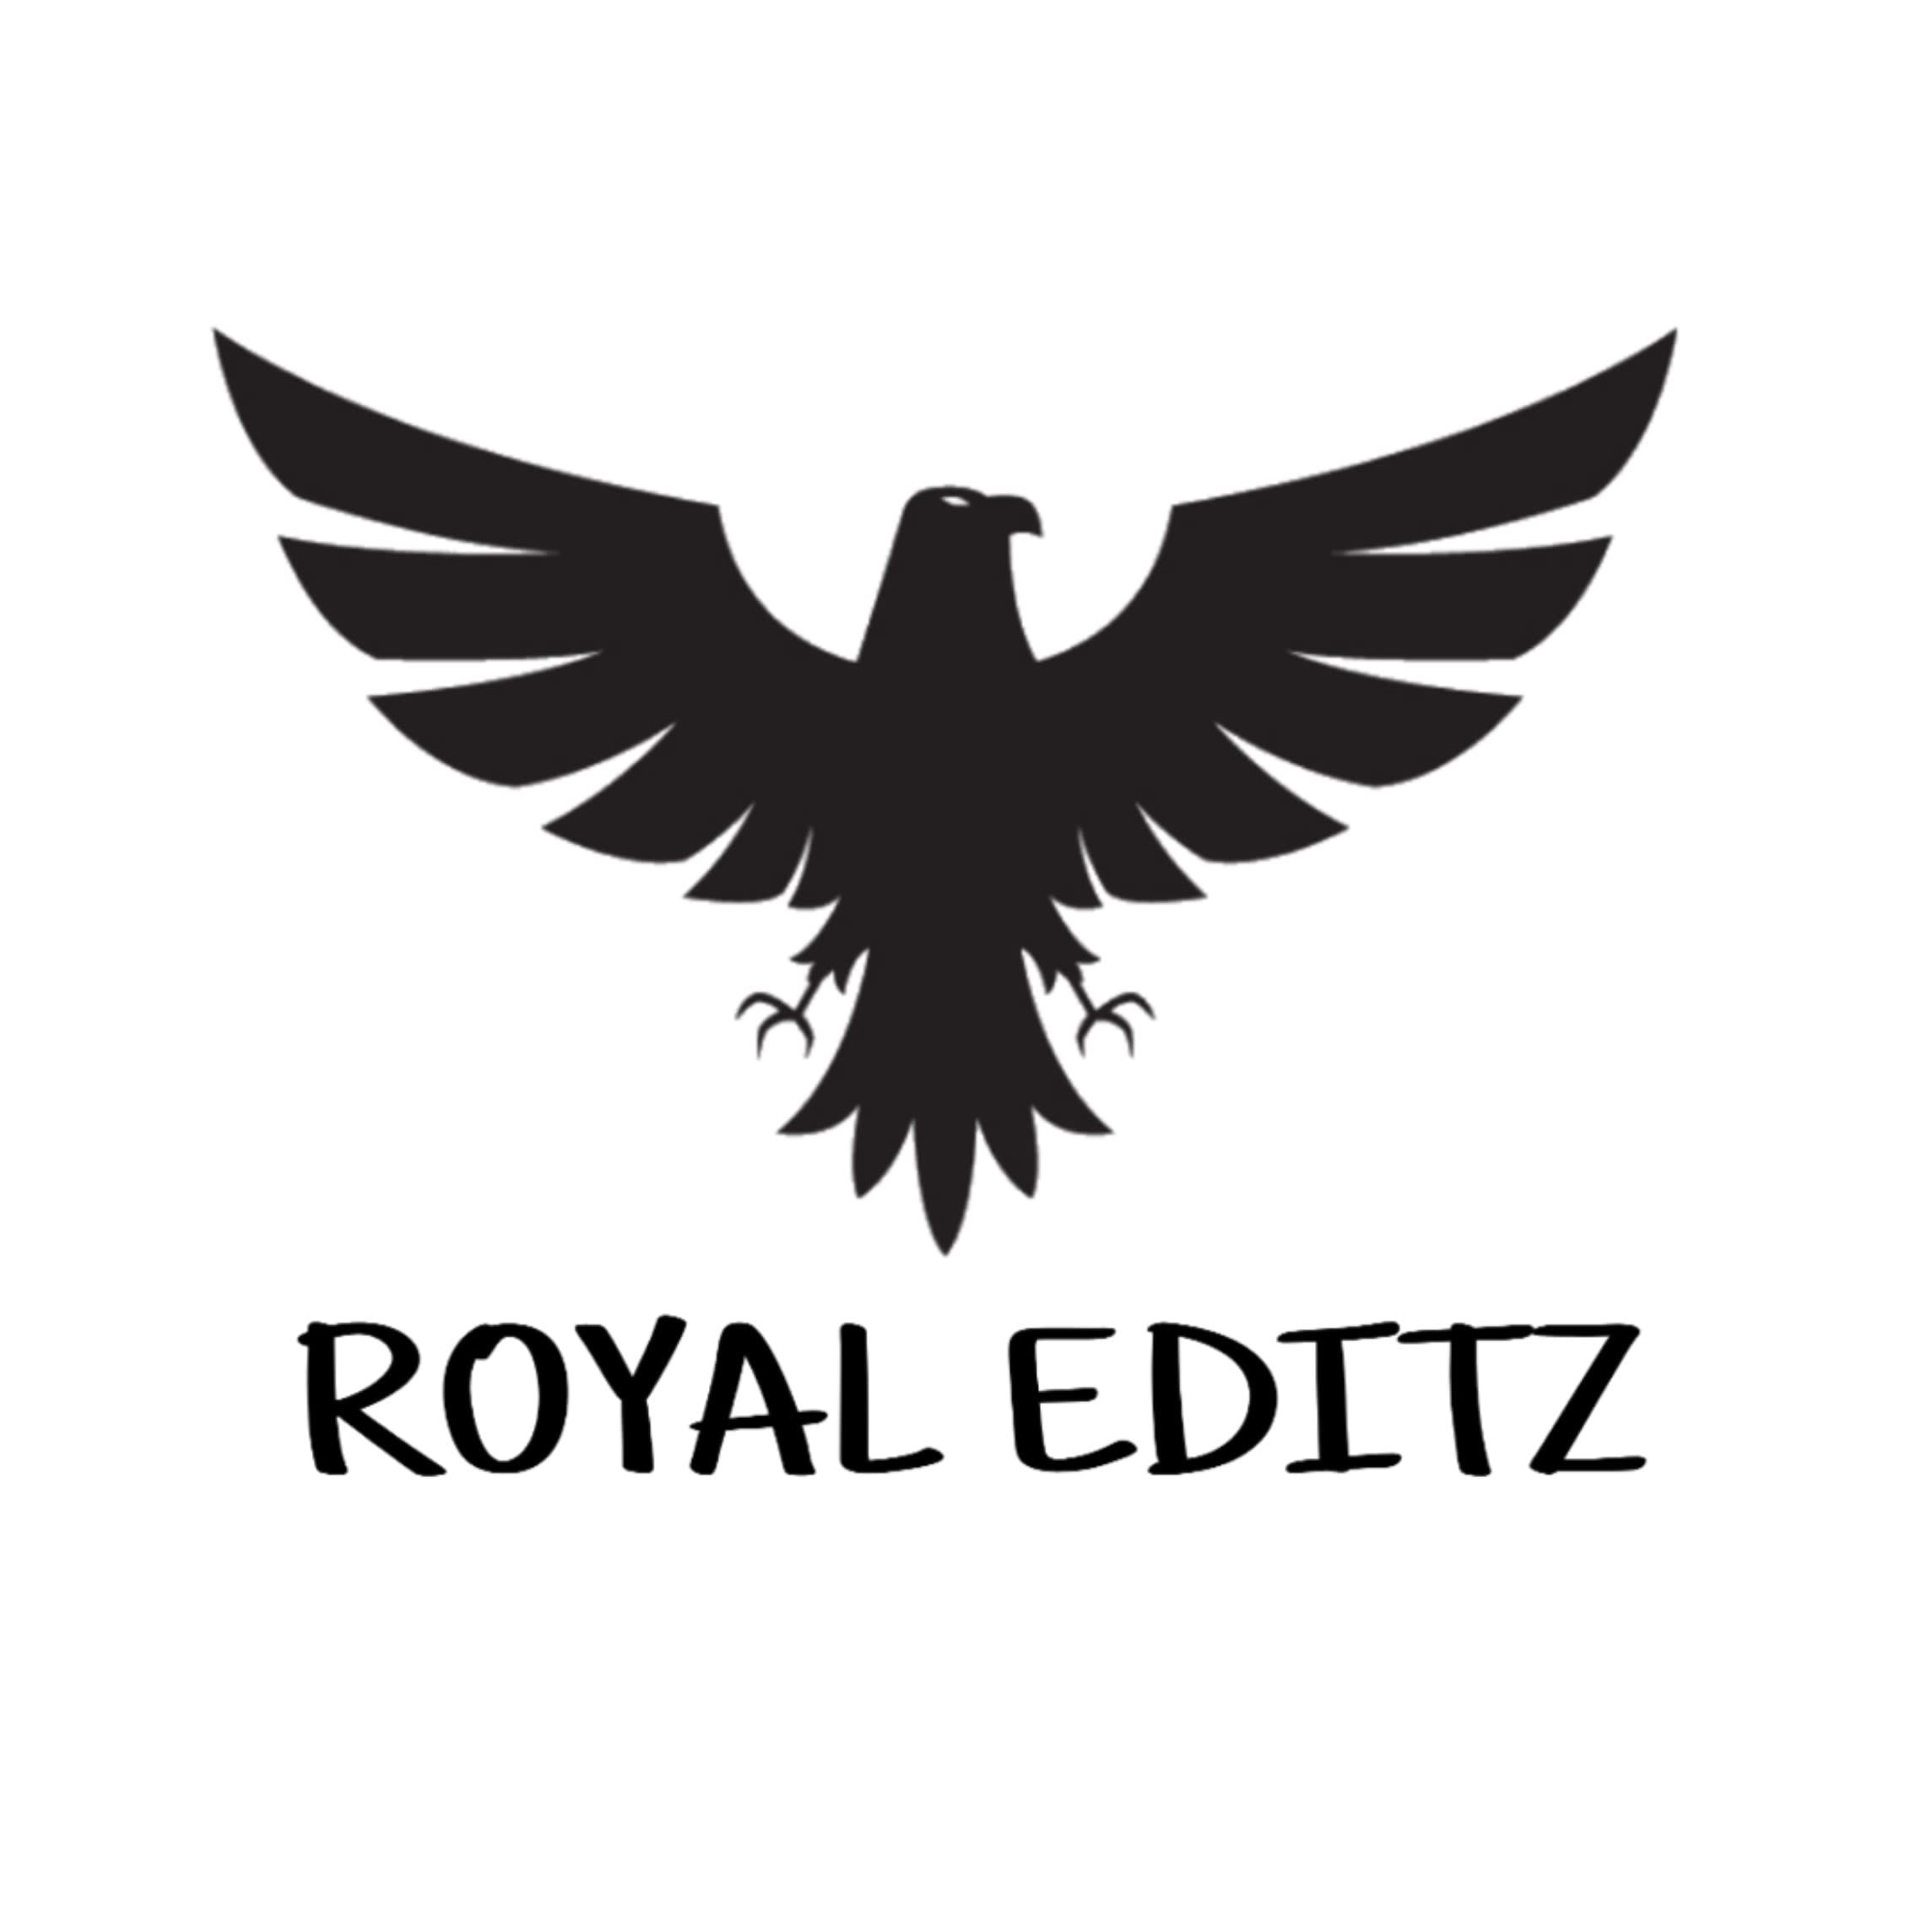 Royal Editz